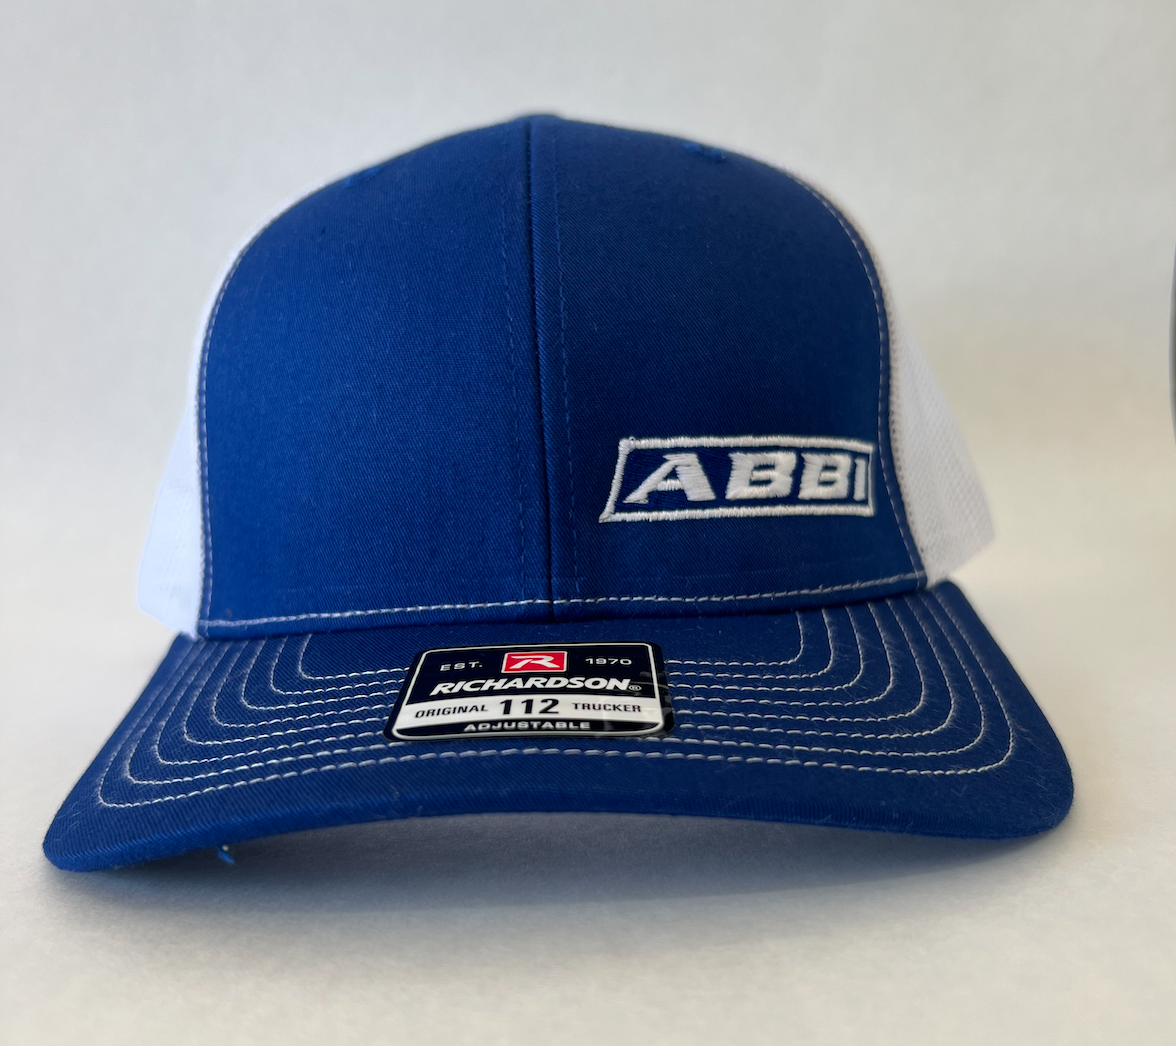 ABBI Richardson 112 Snapback Blue